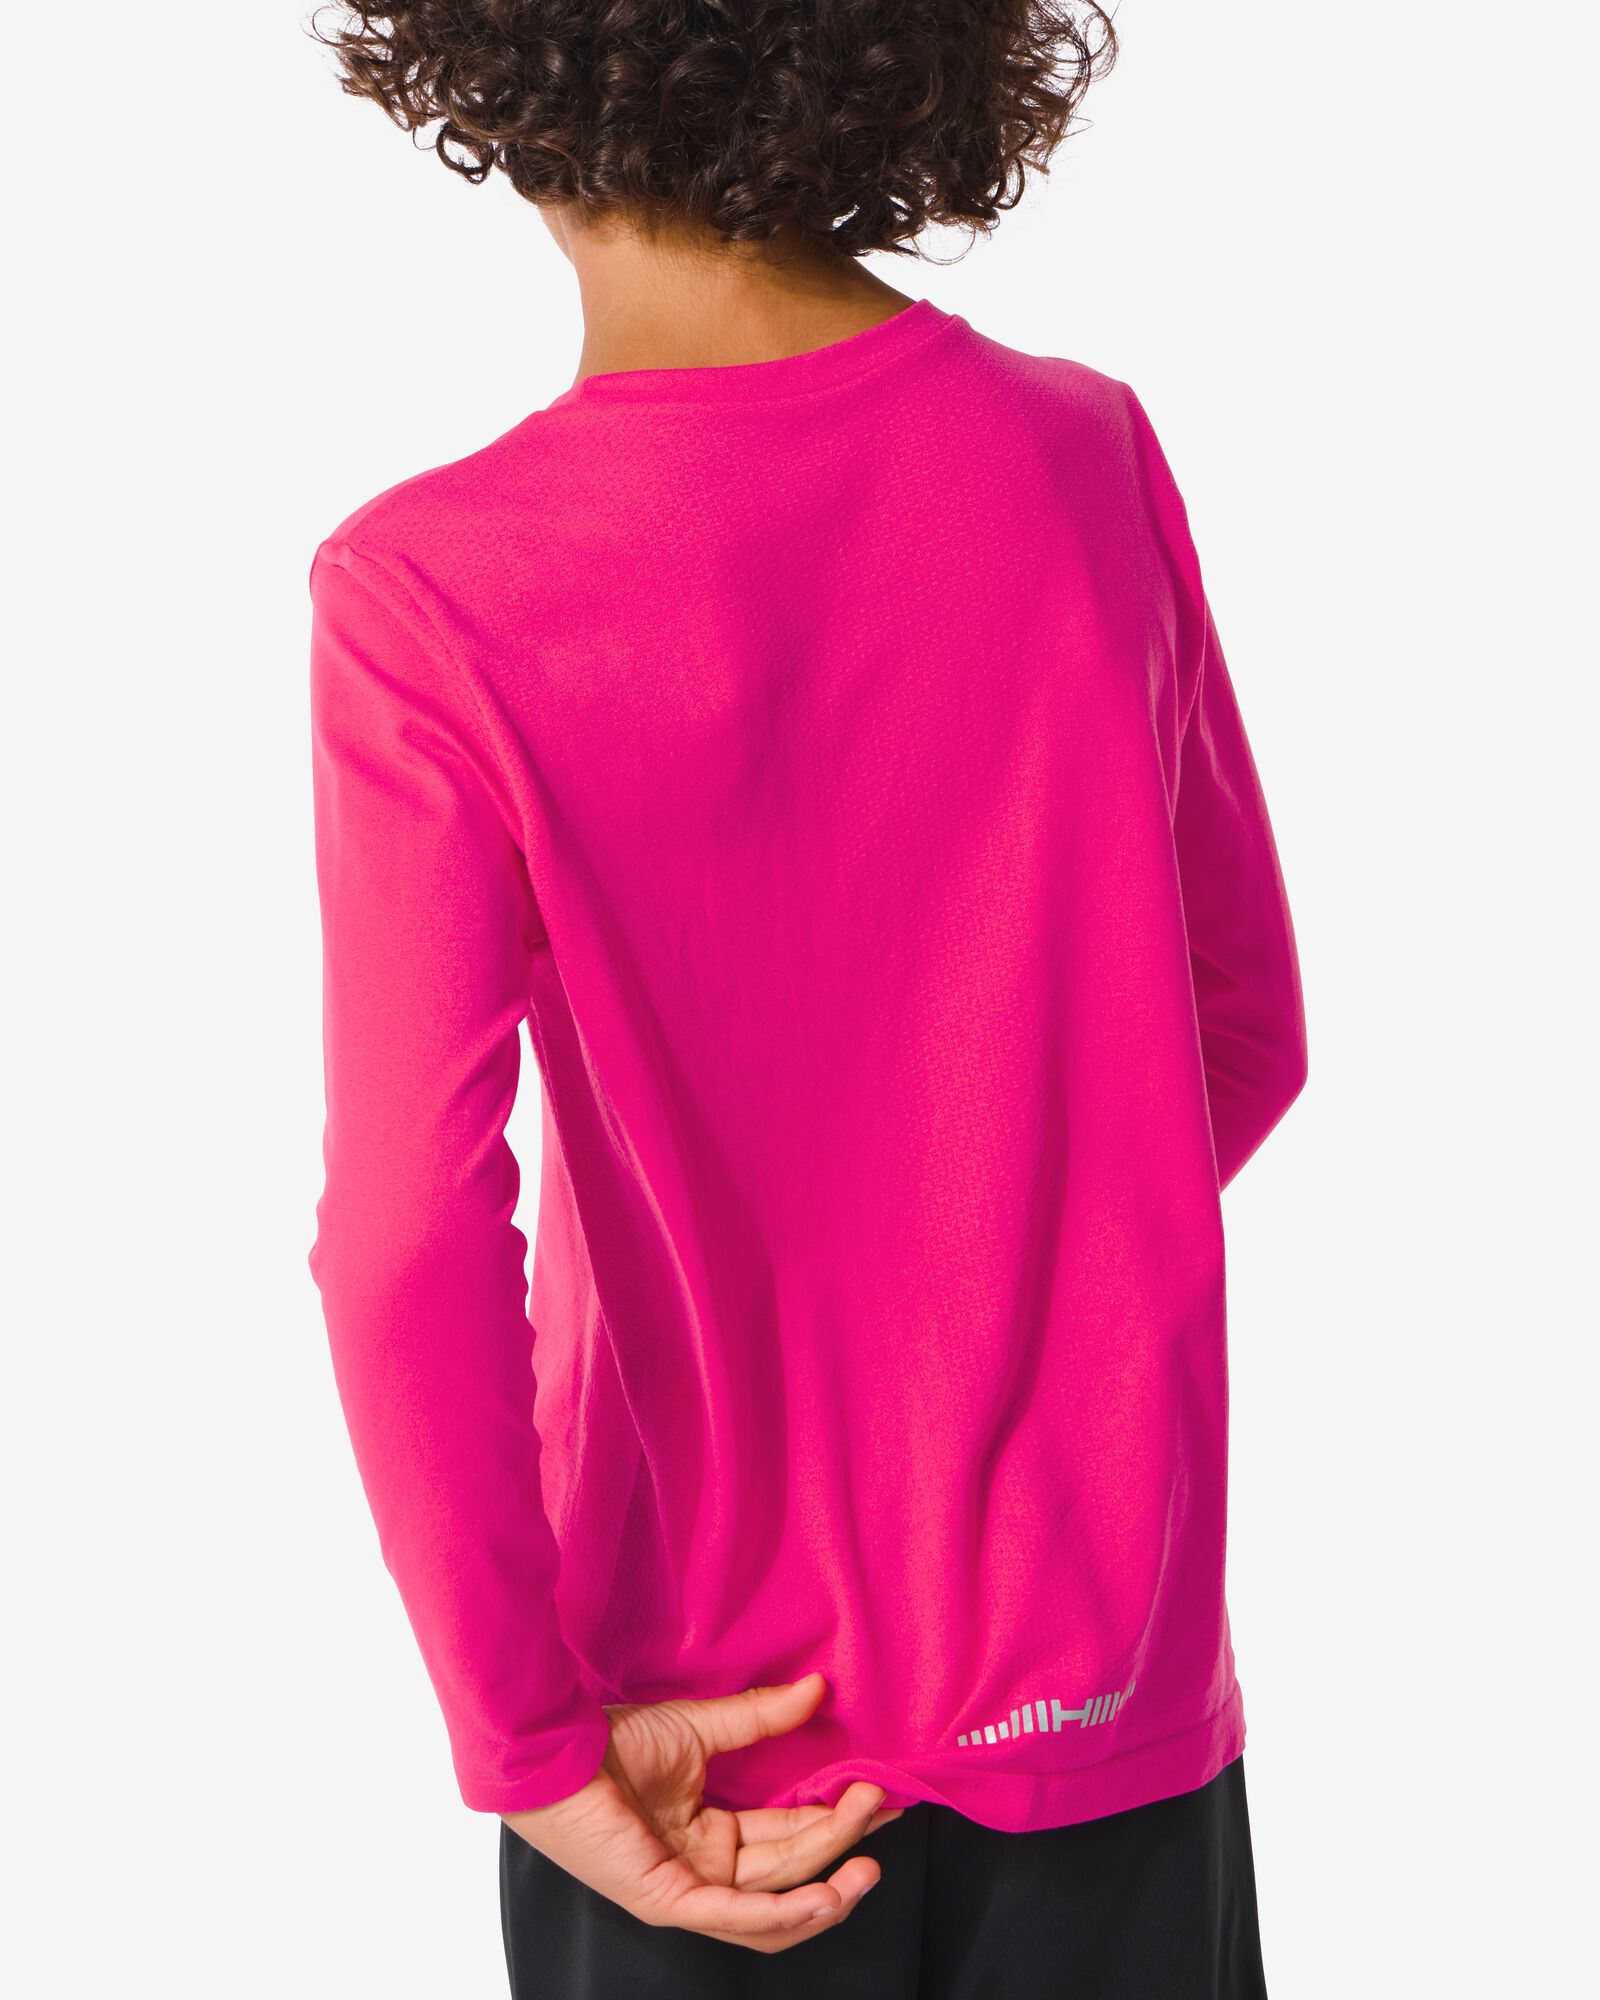 t-shirt de sport enfant sans coutures rose rose - 36090360PINK - HEMA